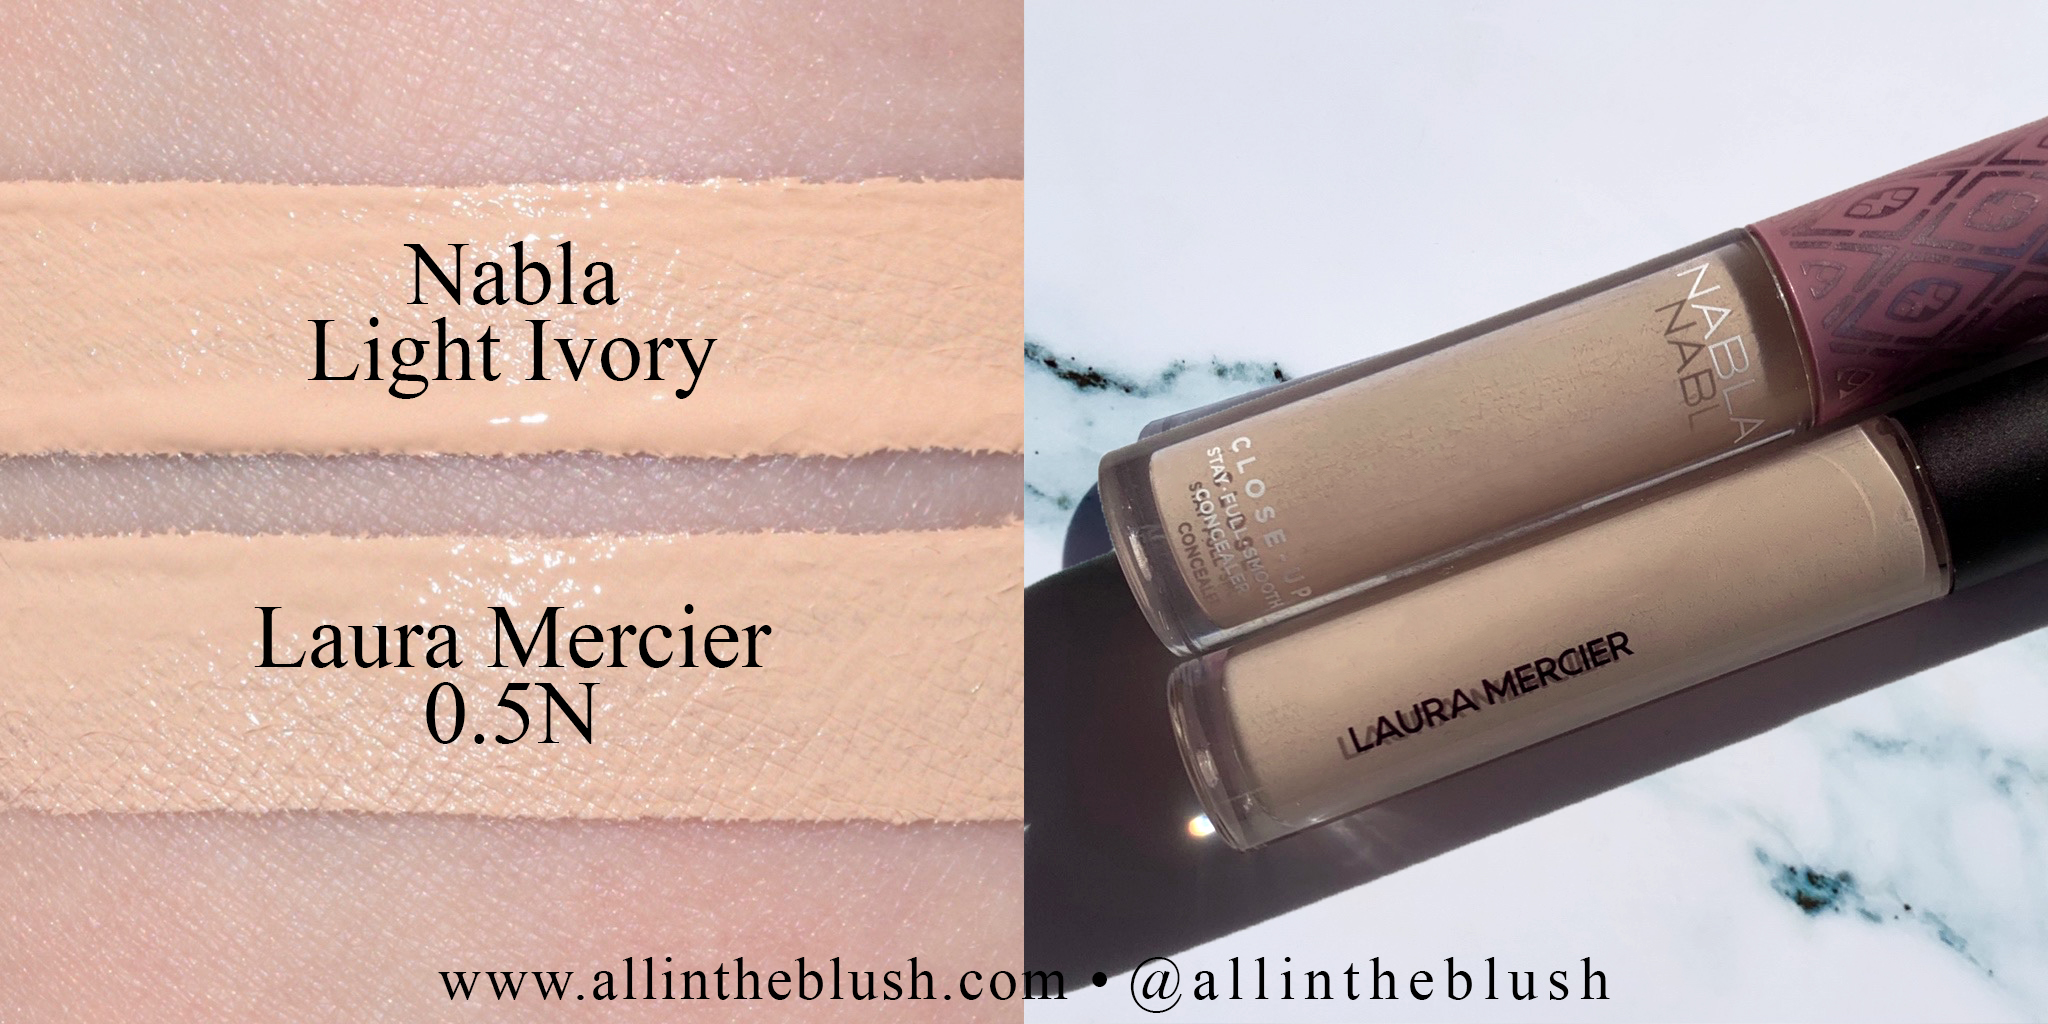 Swatch - Nabla Cosmetics Light Ivory Concealer and Laura Mercier 0.5N Concealer